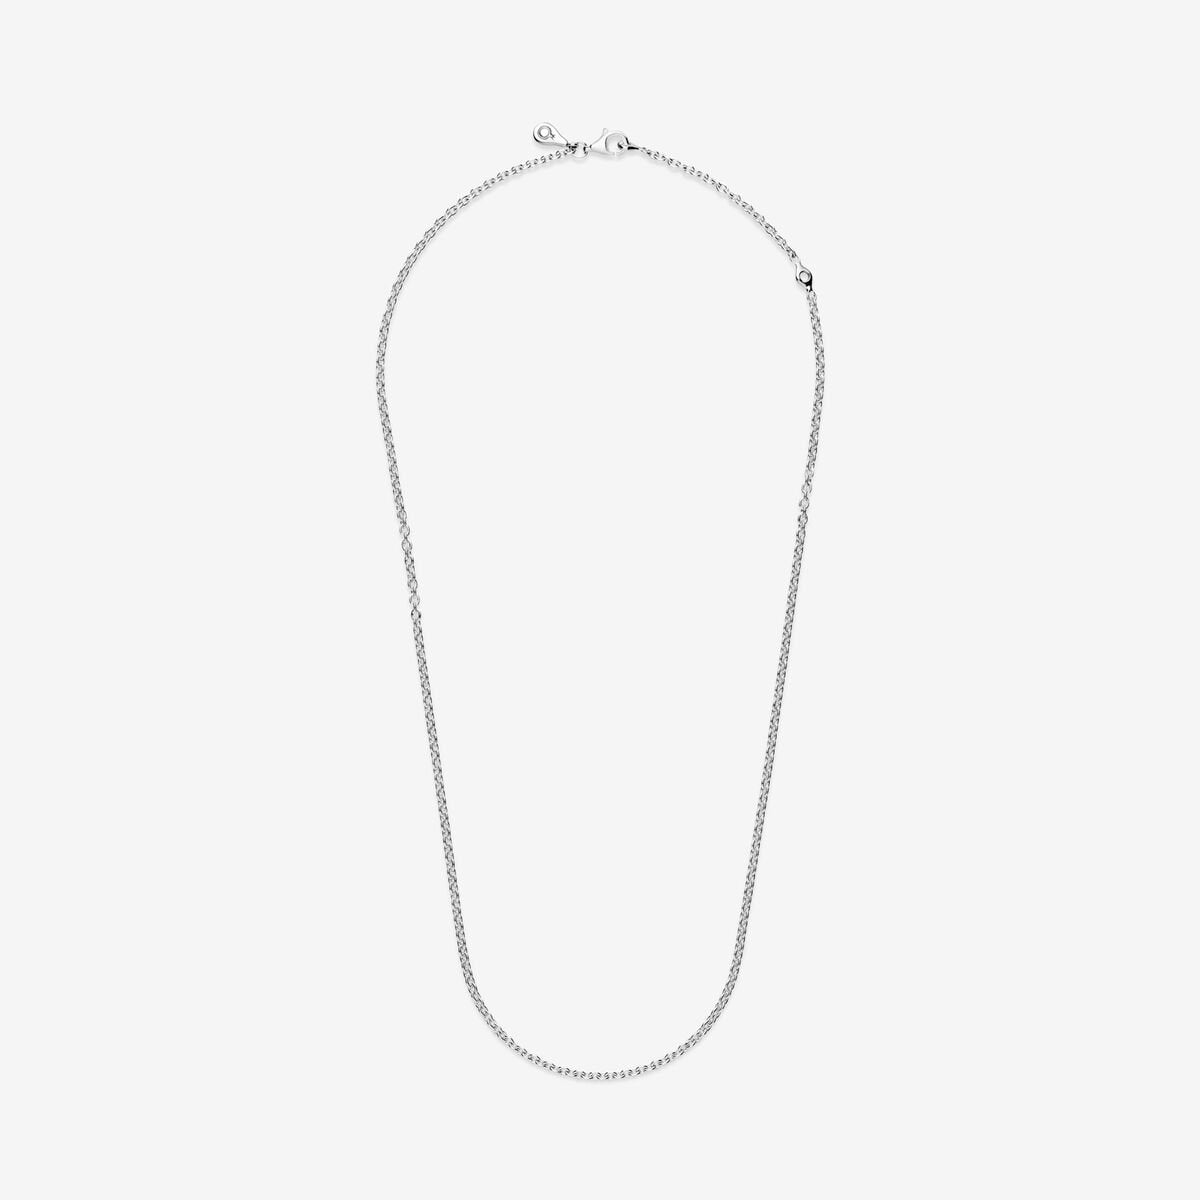 Pandora Cable Chain Necklace